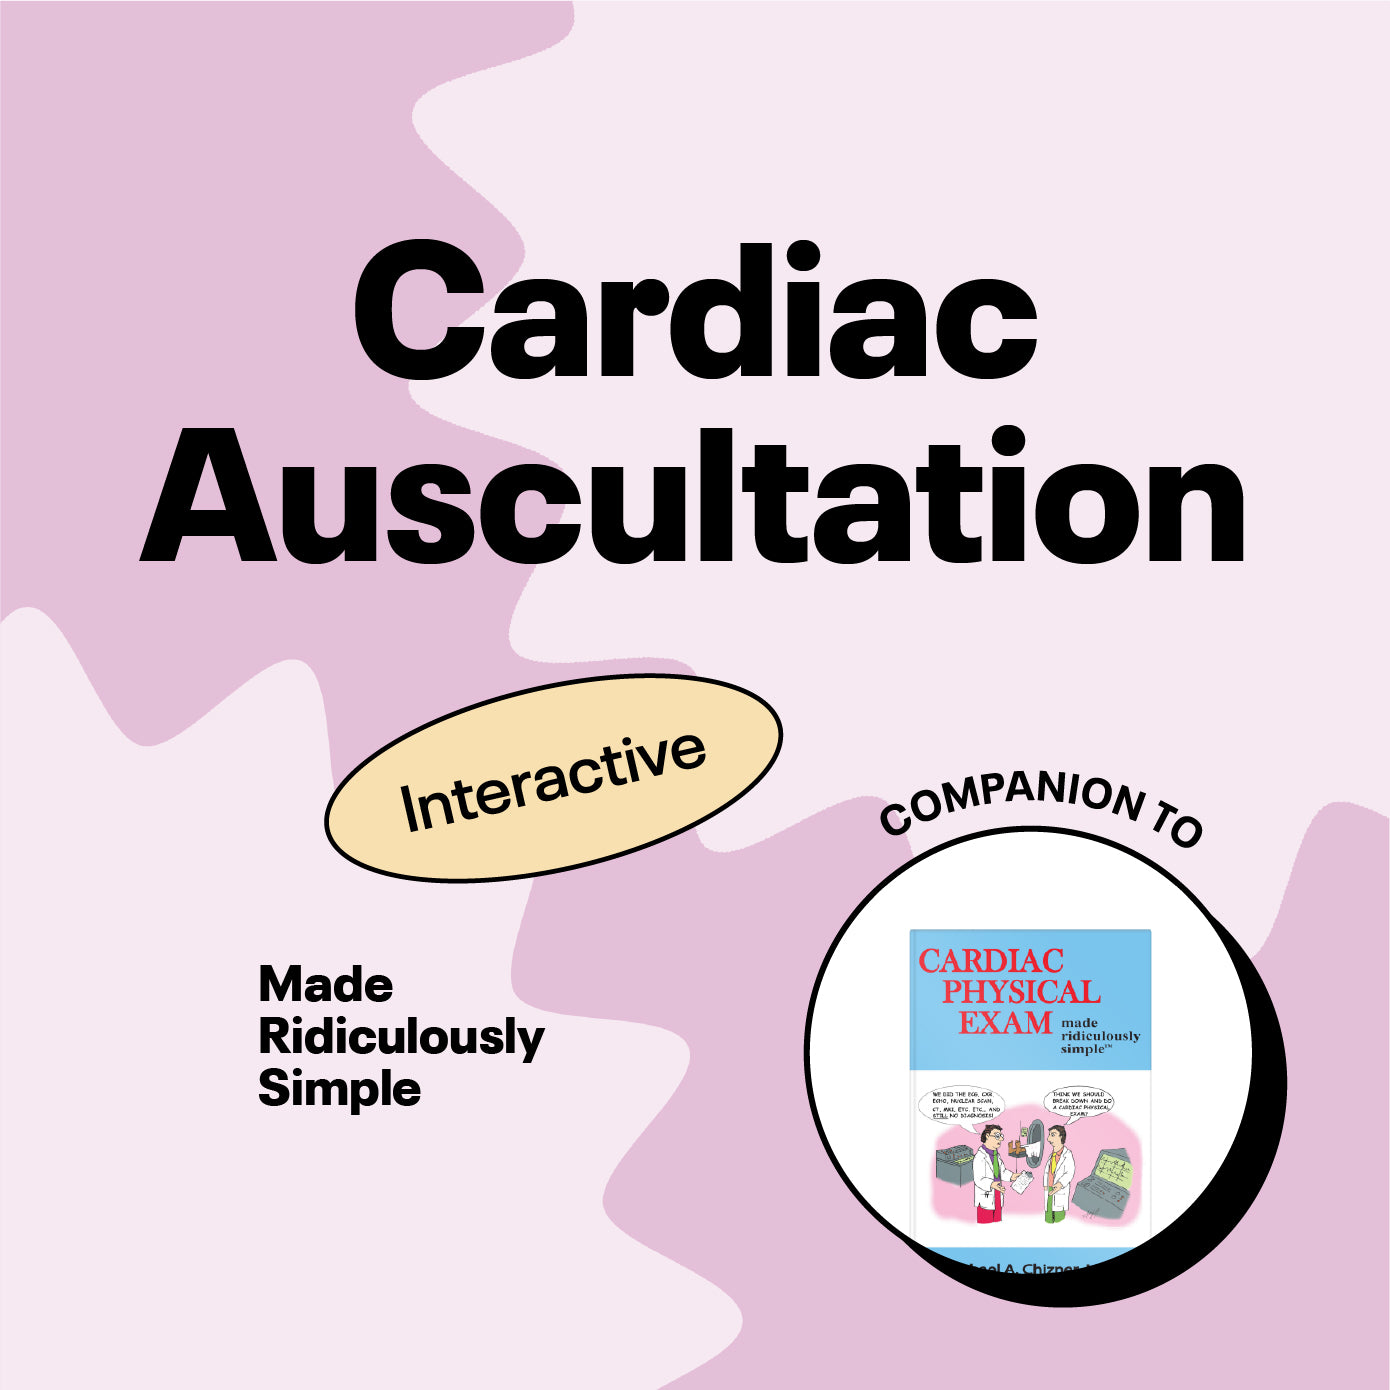 Cardiac Auscultation Made Ridiculously Simple